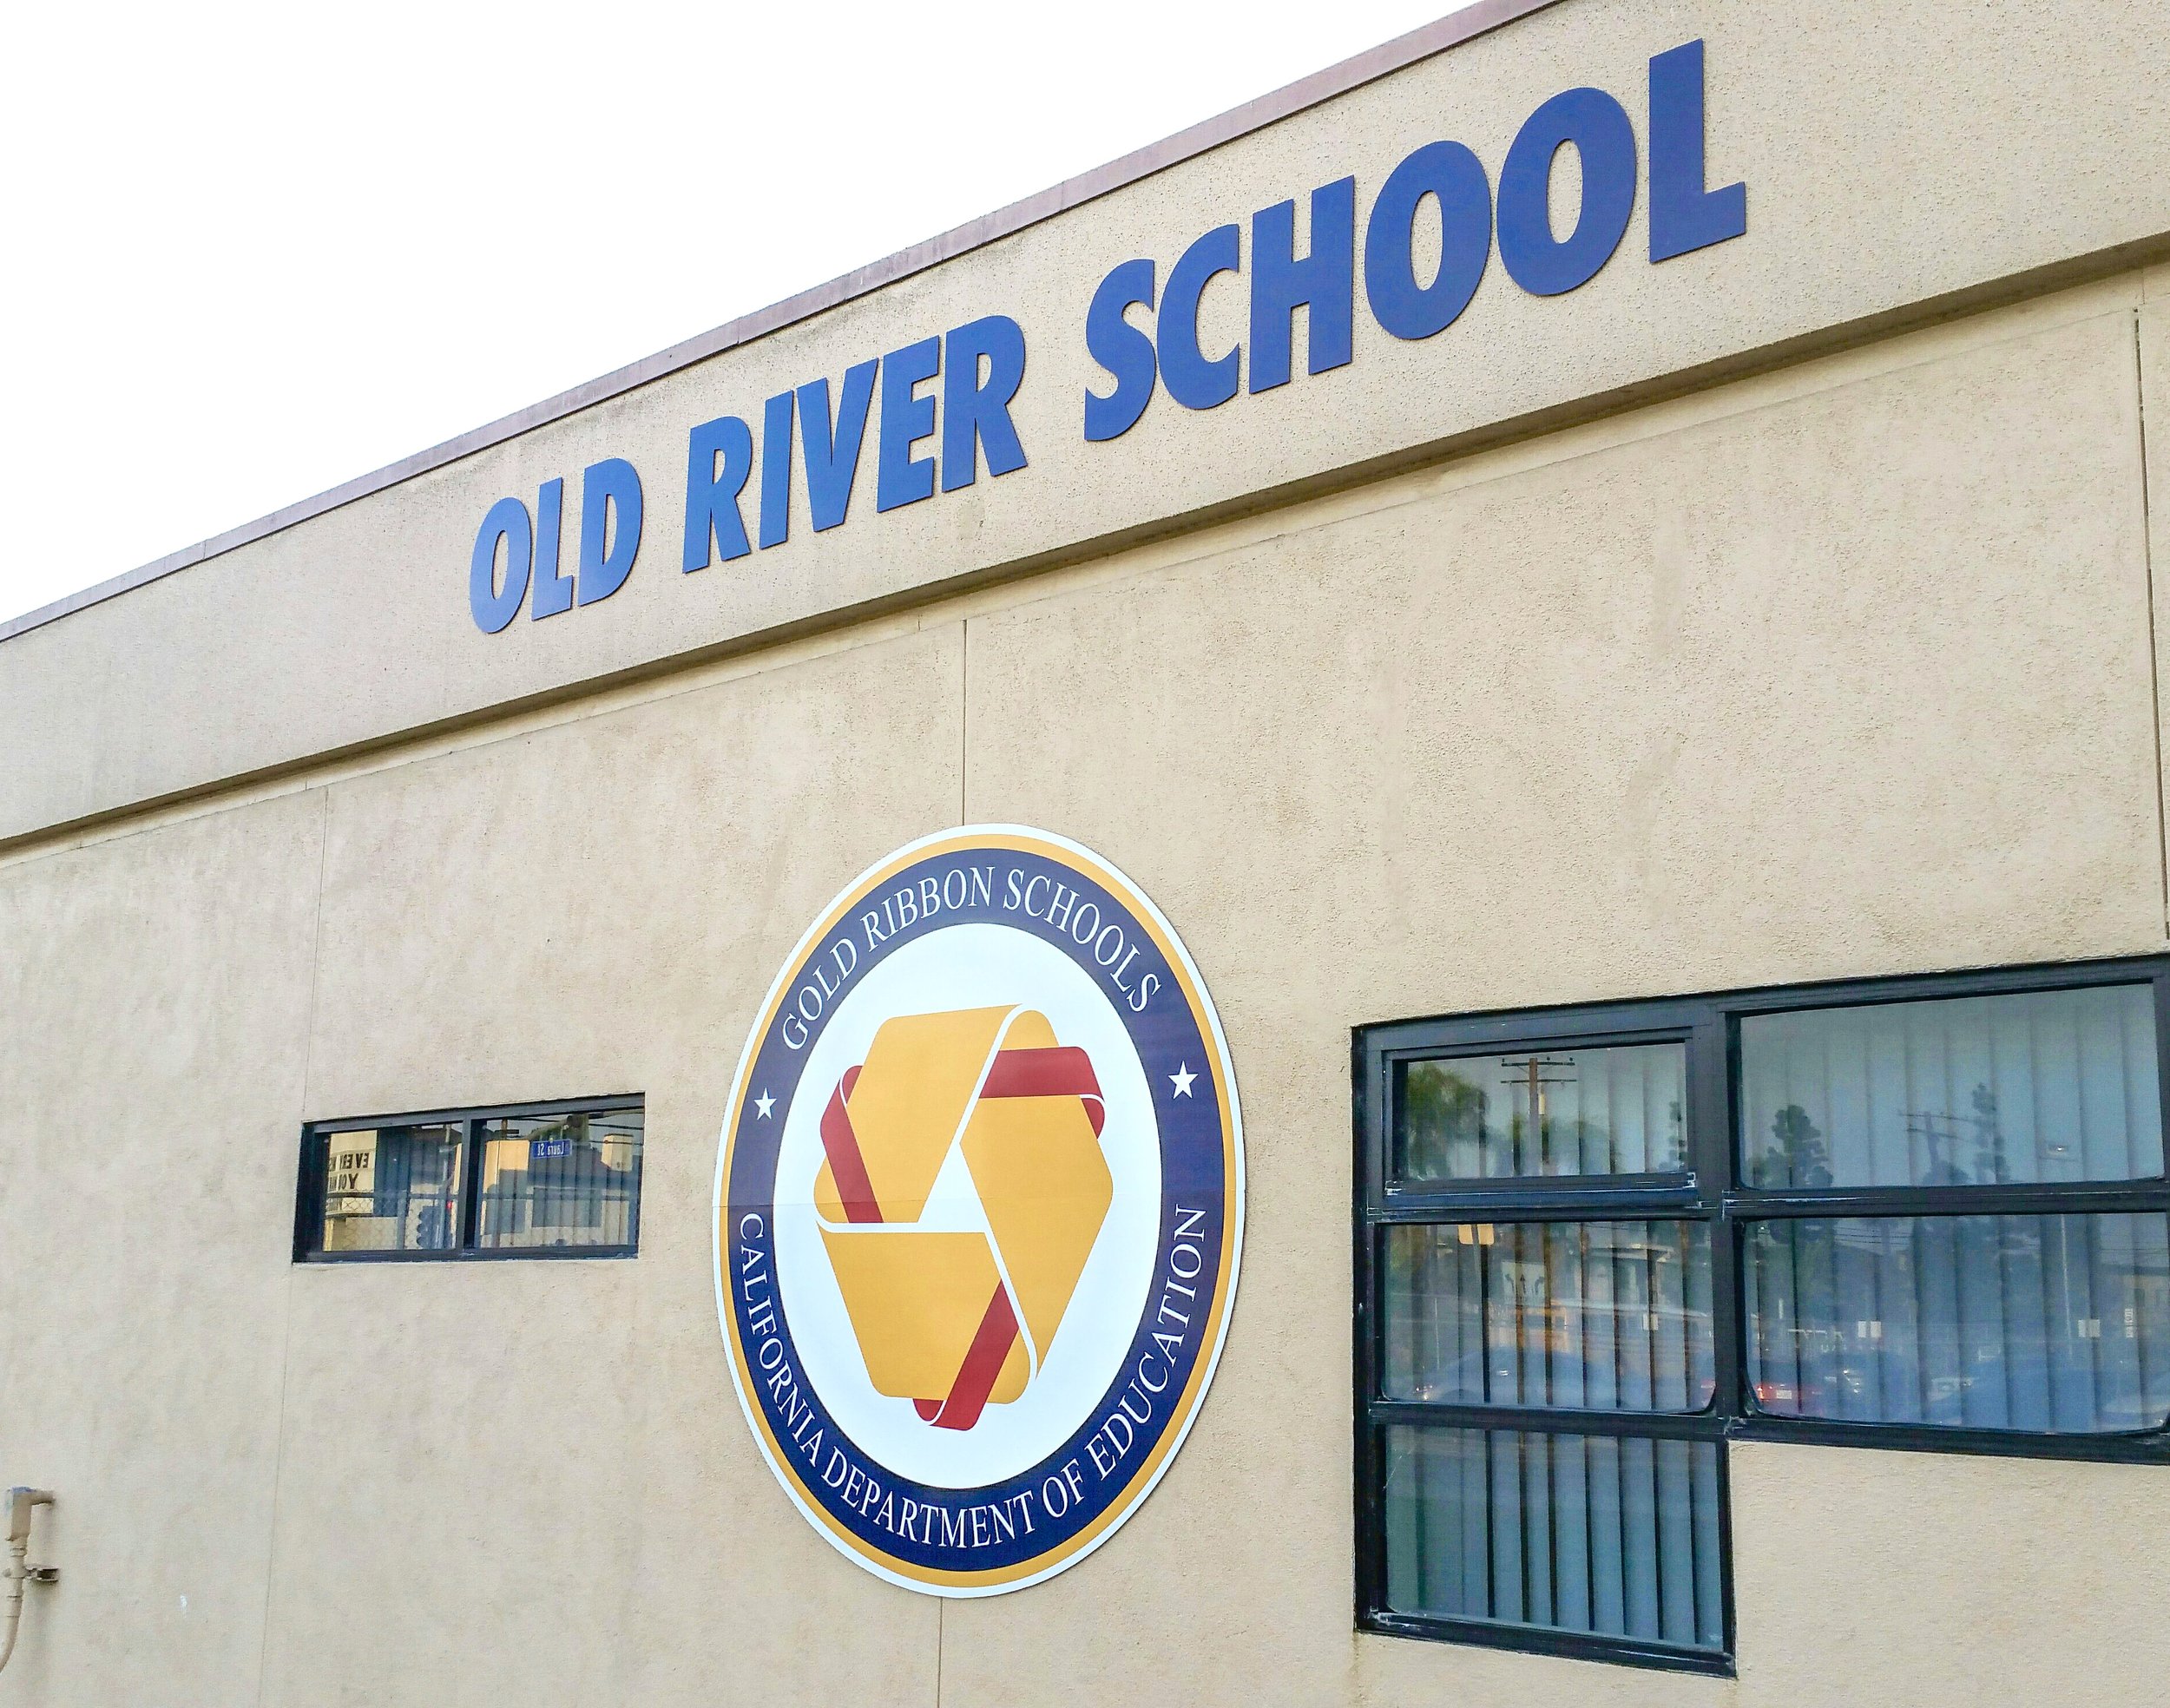 Old River School Gold Ribbon School award sign